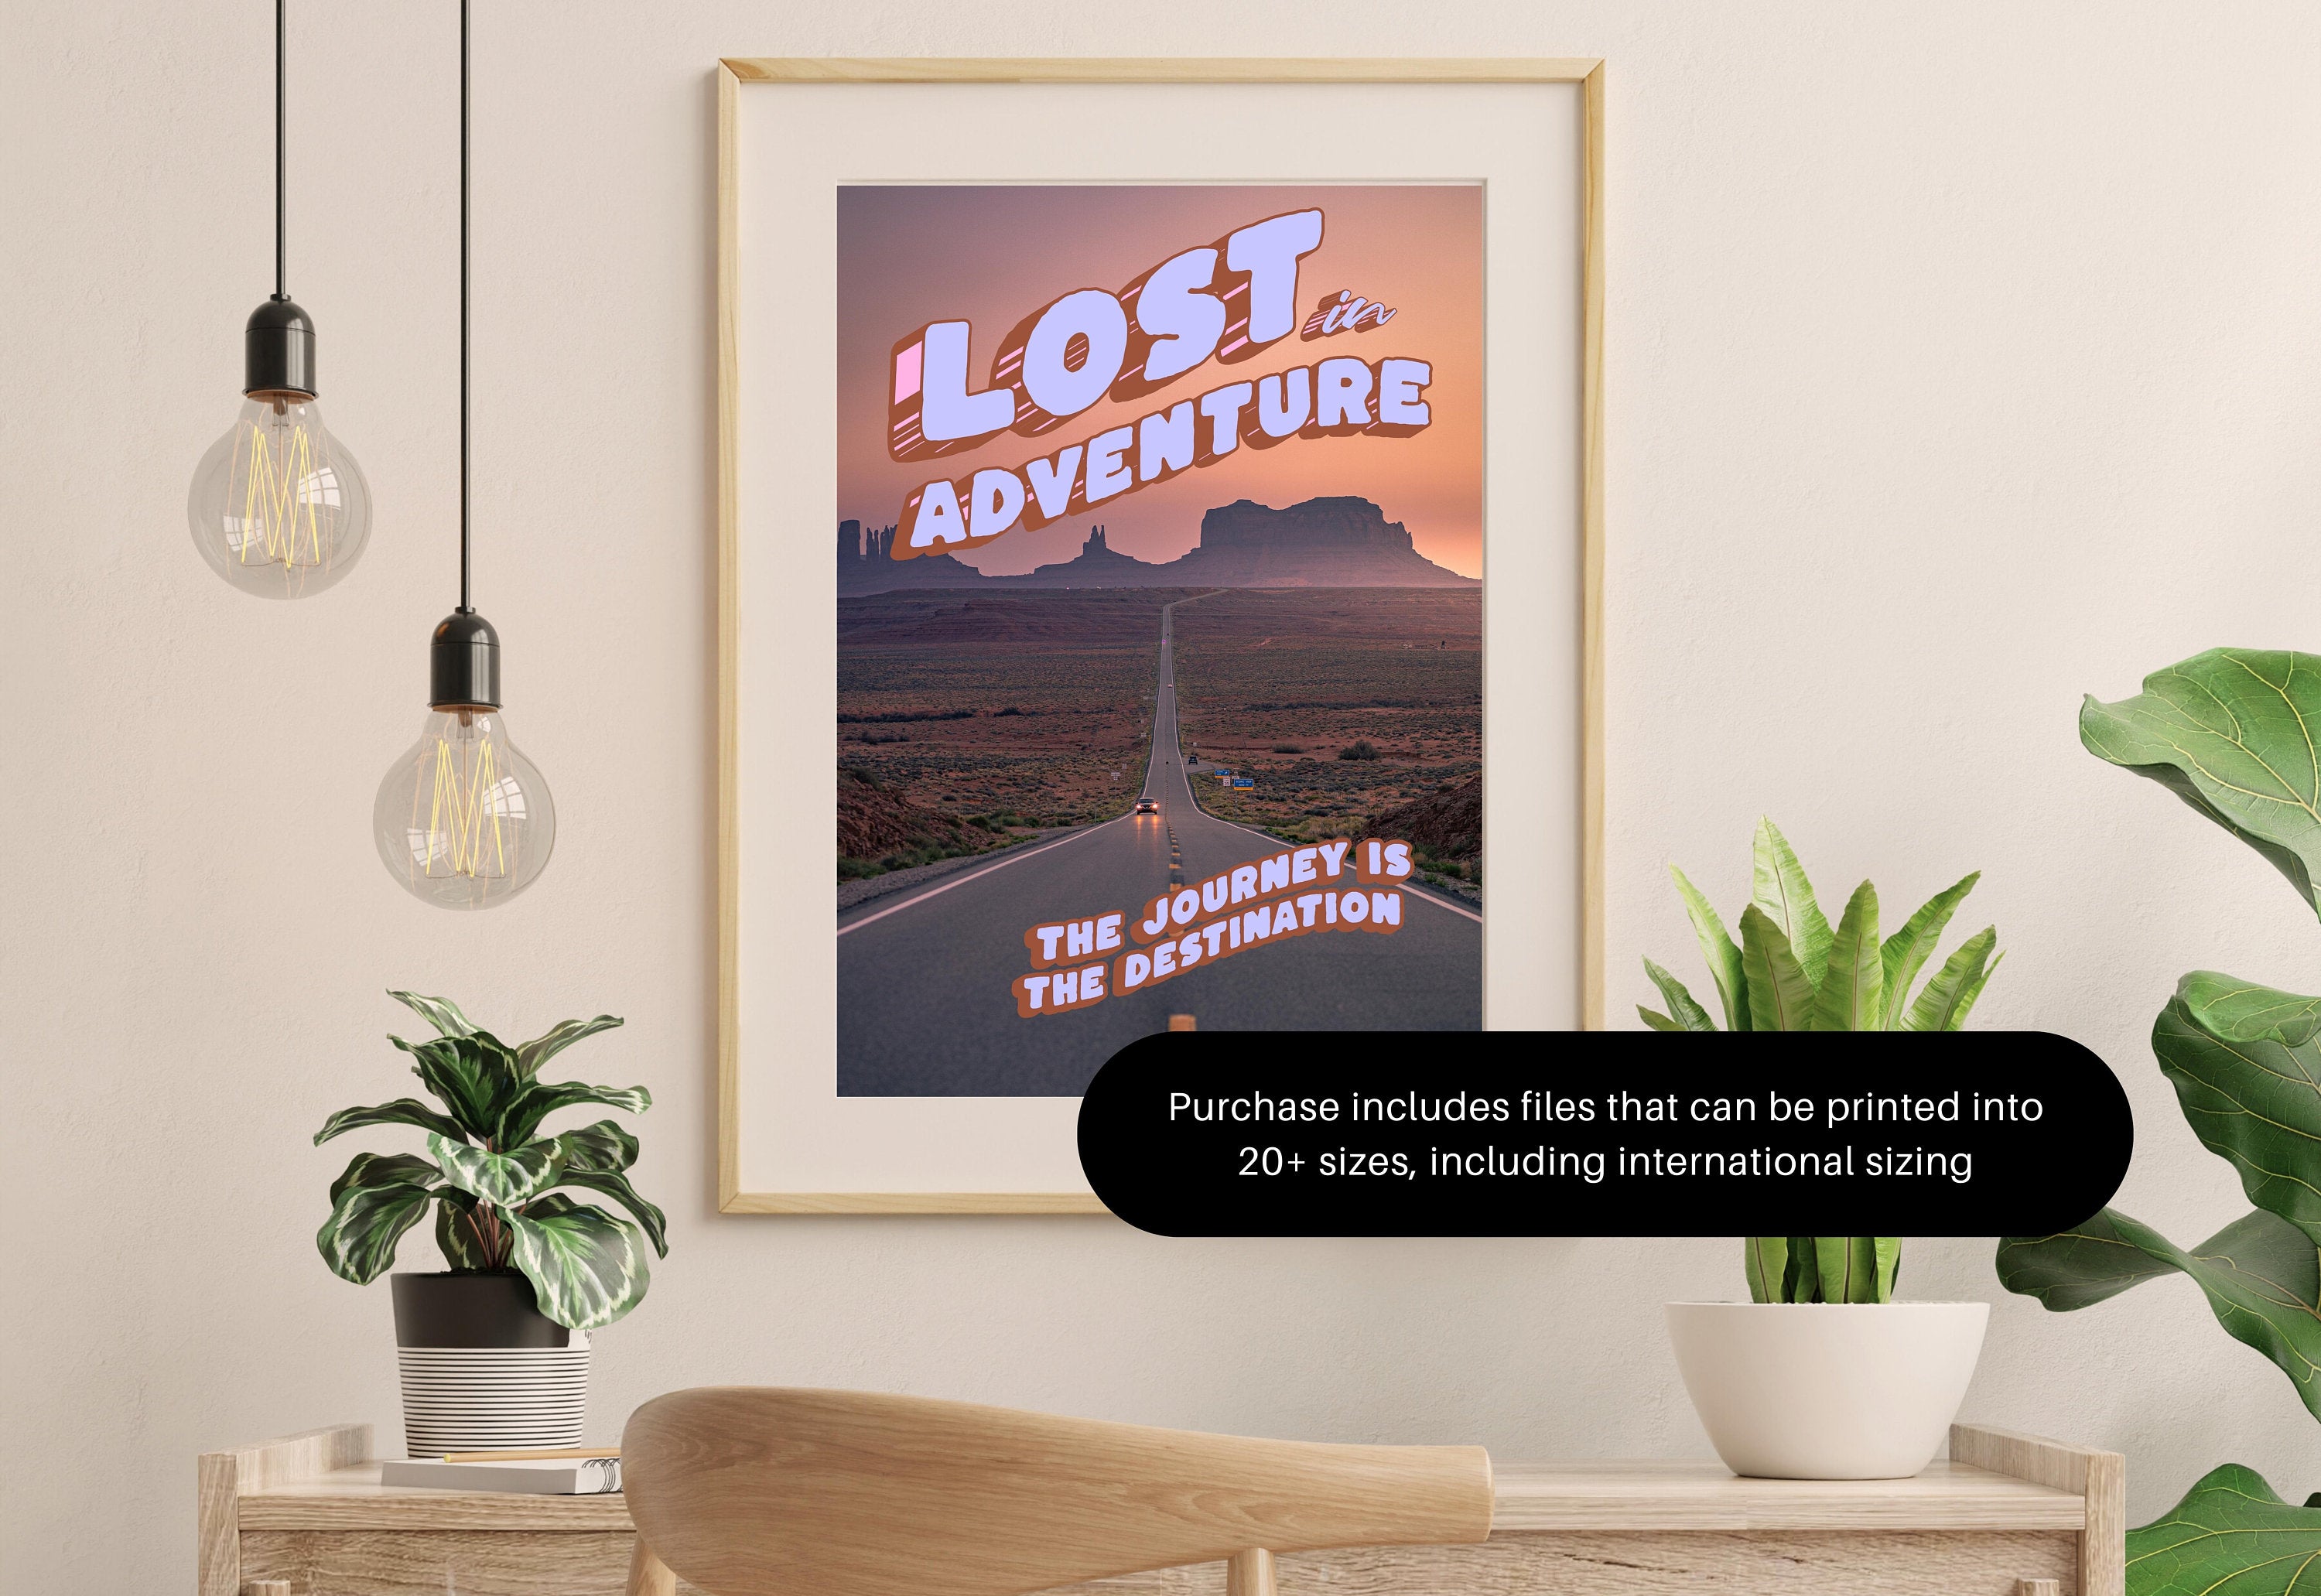 Lost in Adventure Art-Digital Art Prints-Cocktail Wall Art-Retro Photo Prints-Retro Photo Art Print-Preppy Art-Grainy Gradient-Trendy Print